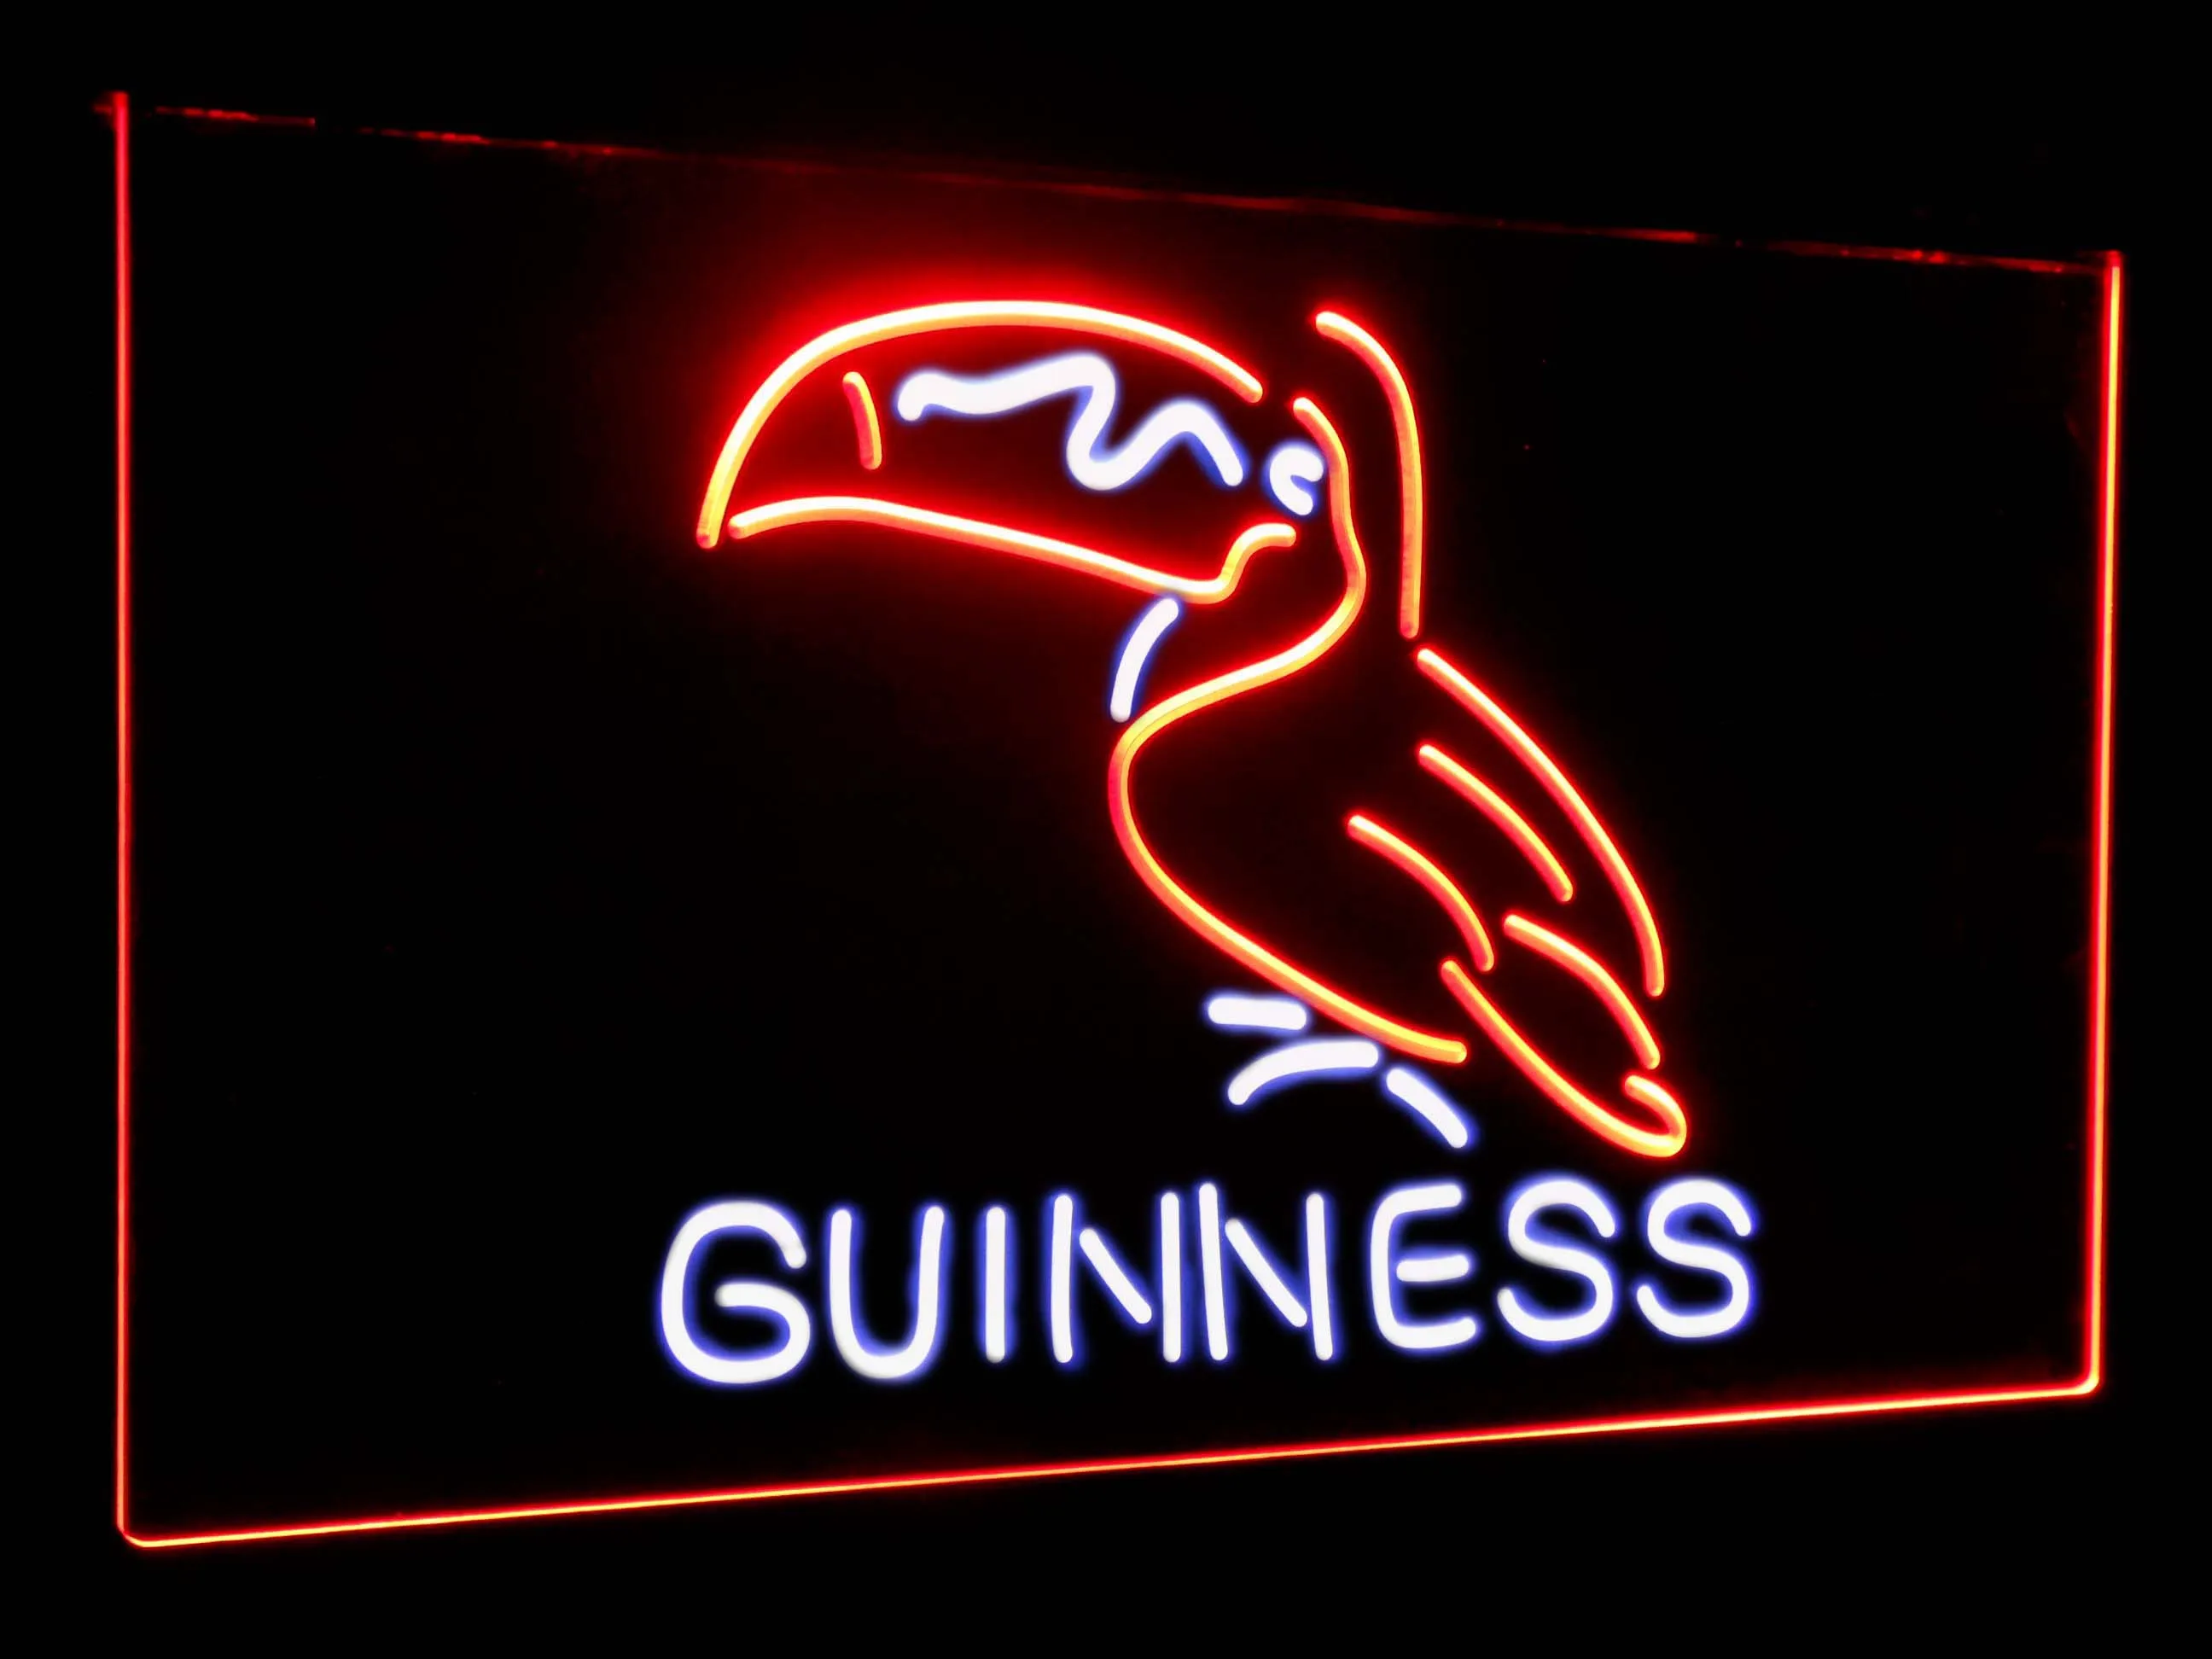 Guinness Toucan Stout Разливное пиво Бар Декор двойной цвет светодиодные неоновые световые знаки st6-a2120 - Цвет: White and Red